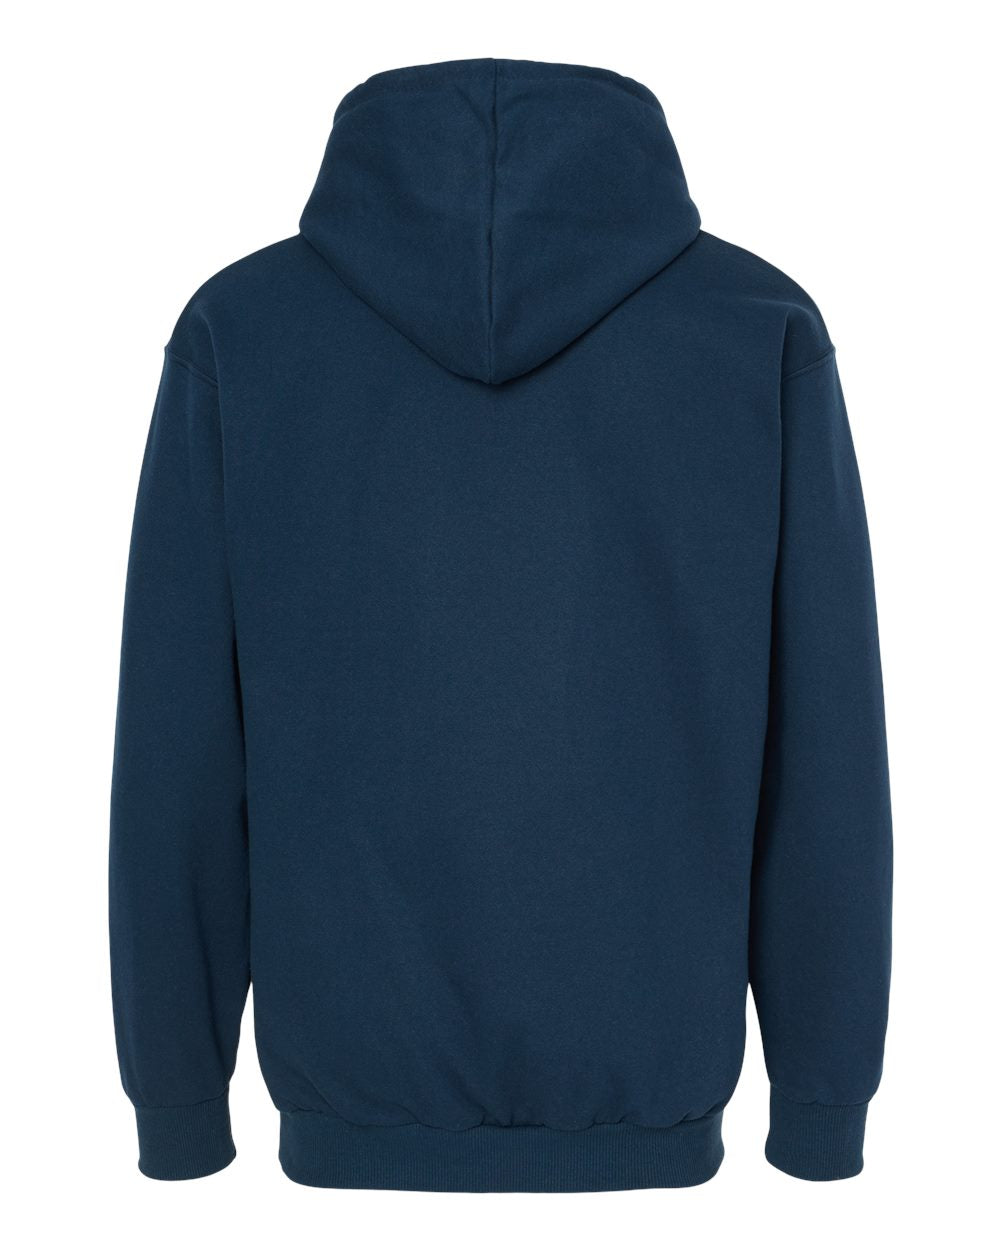 King Fashion Two-Tone Hooded Sweatshirt KF9041 #color_Navy/ Light Blue